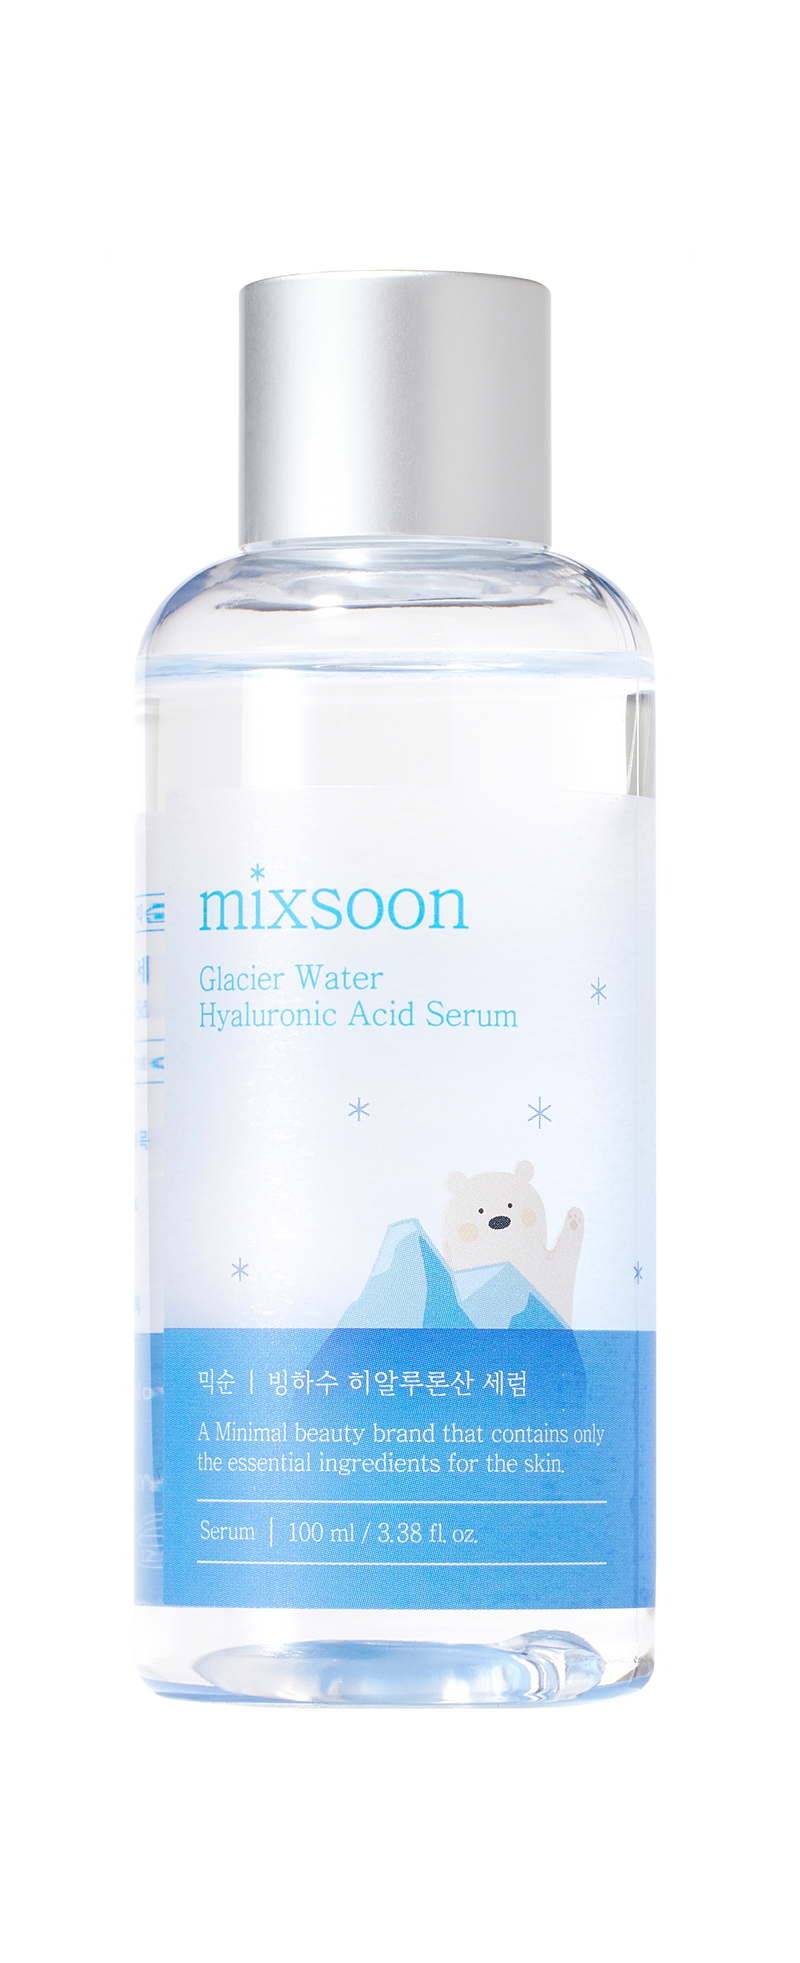 MIXSOON - Glacier Water Hyaluronic Acid Serum